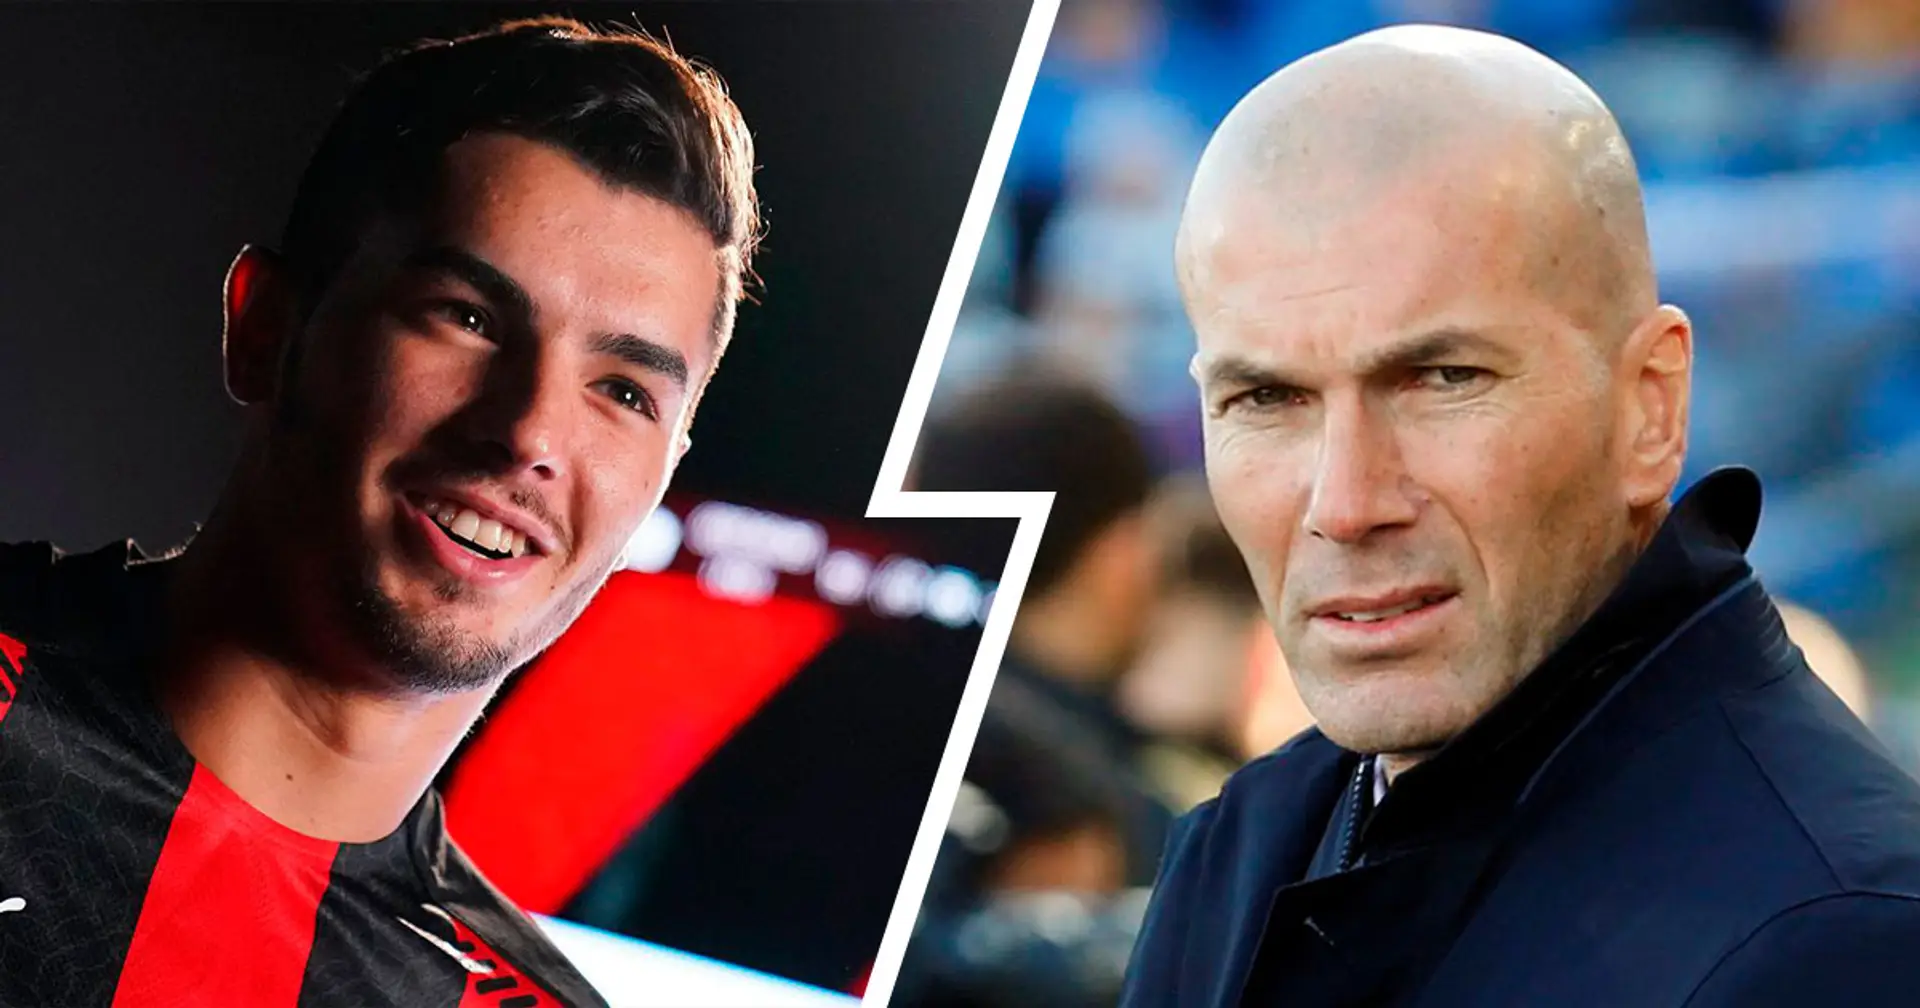 'Siempre me ha dado buenos consejos': Brahim Díaz expresa especial cariño por Zidane